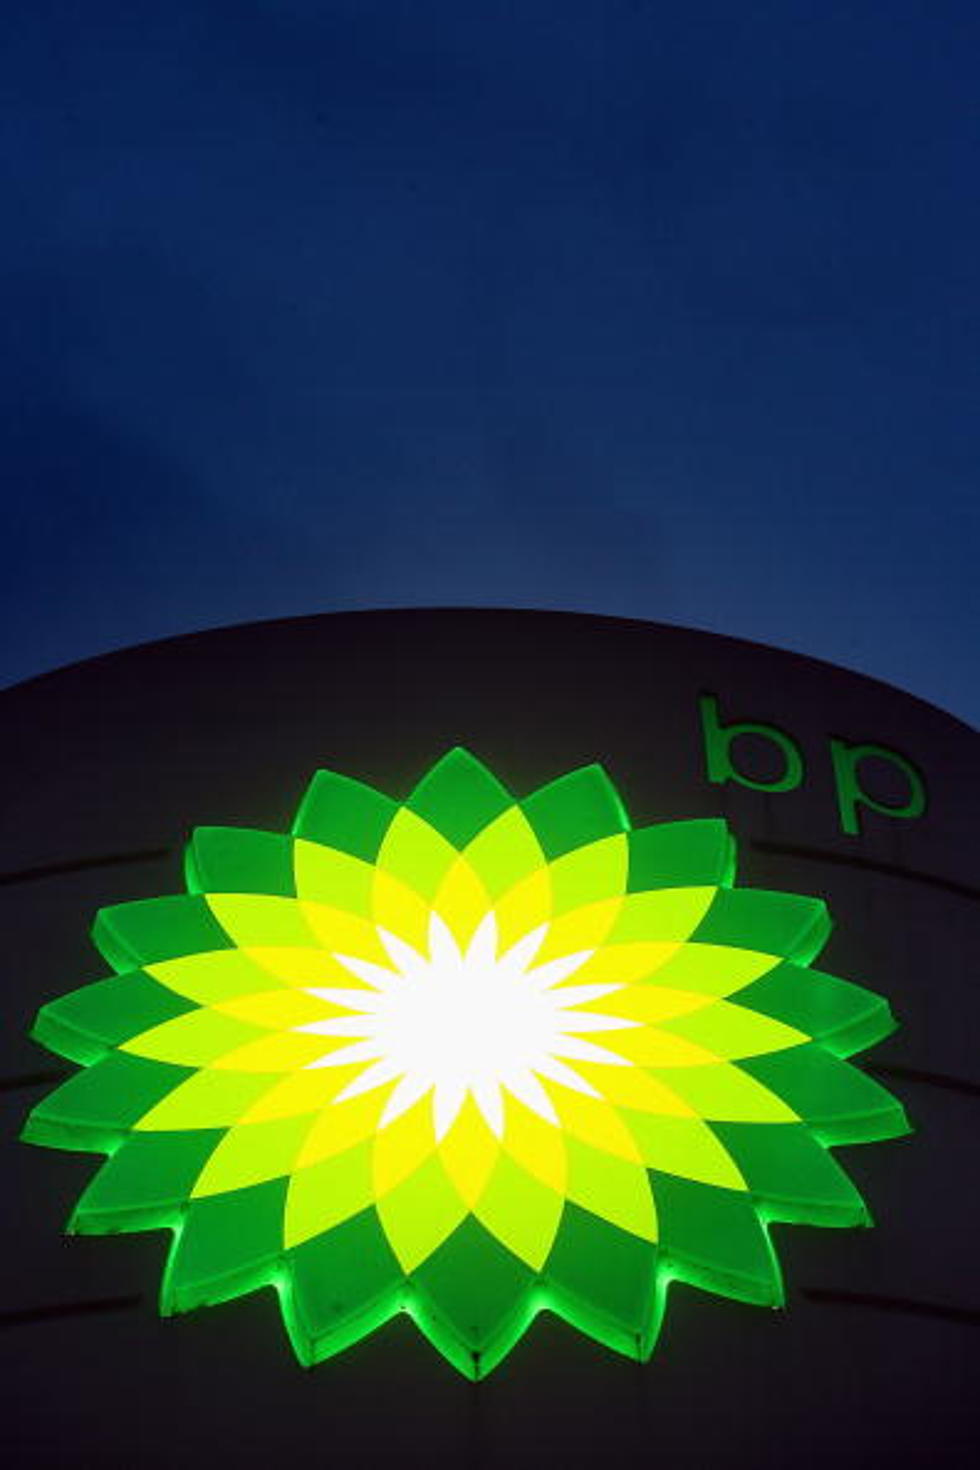 BP Buys Gulf Coast Millions